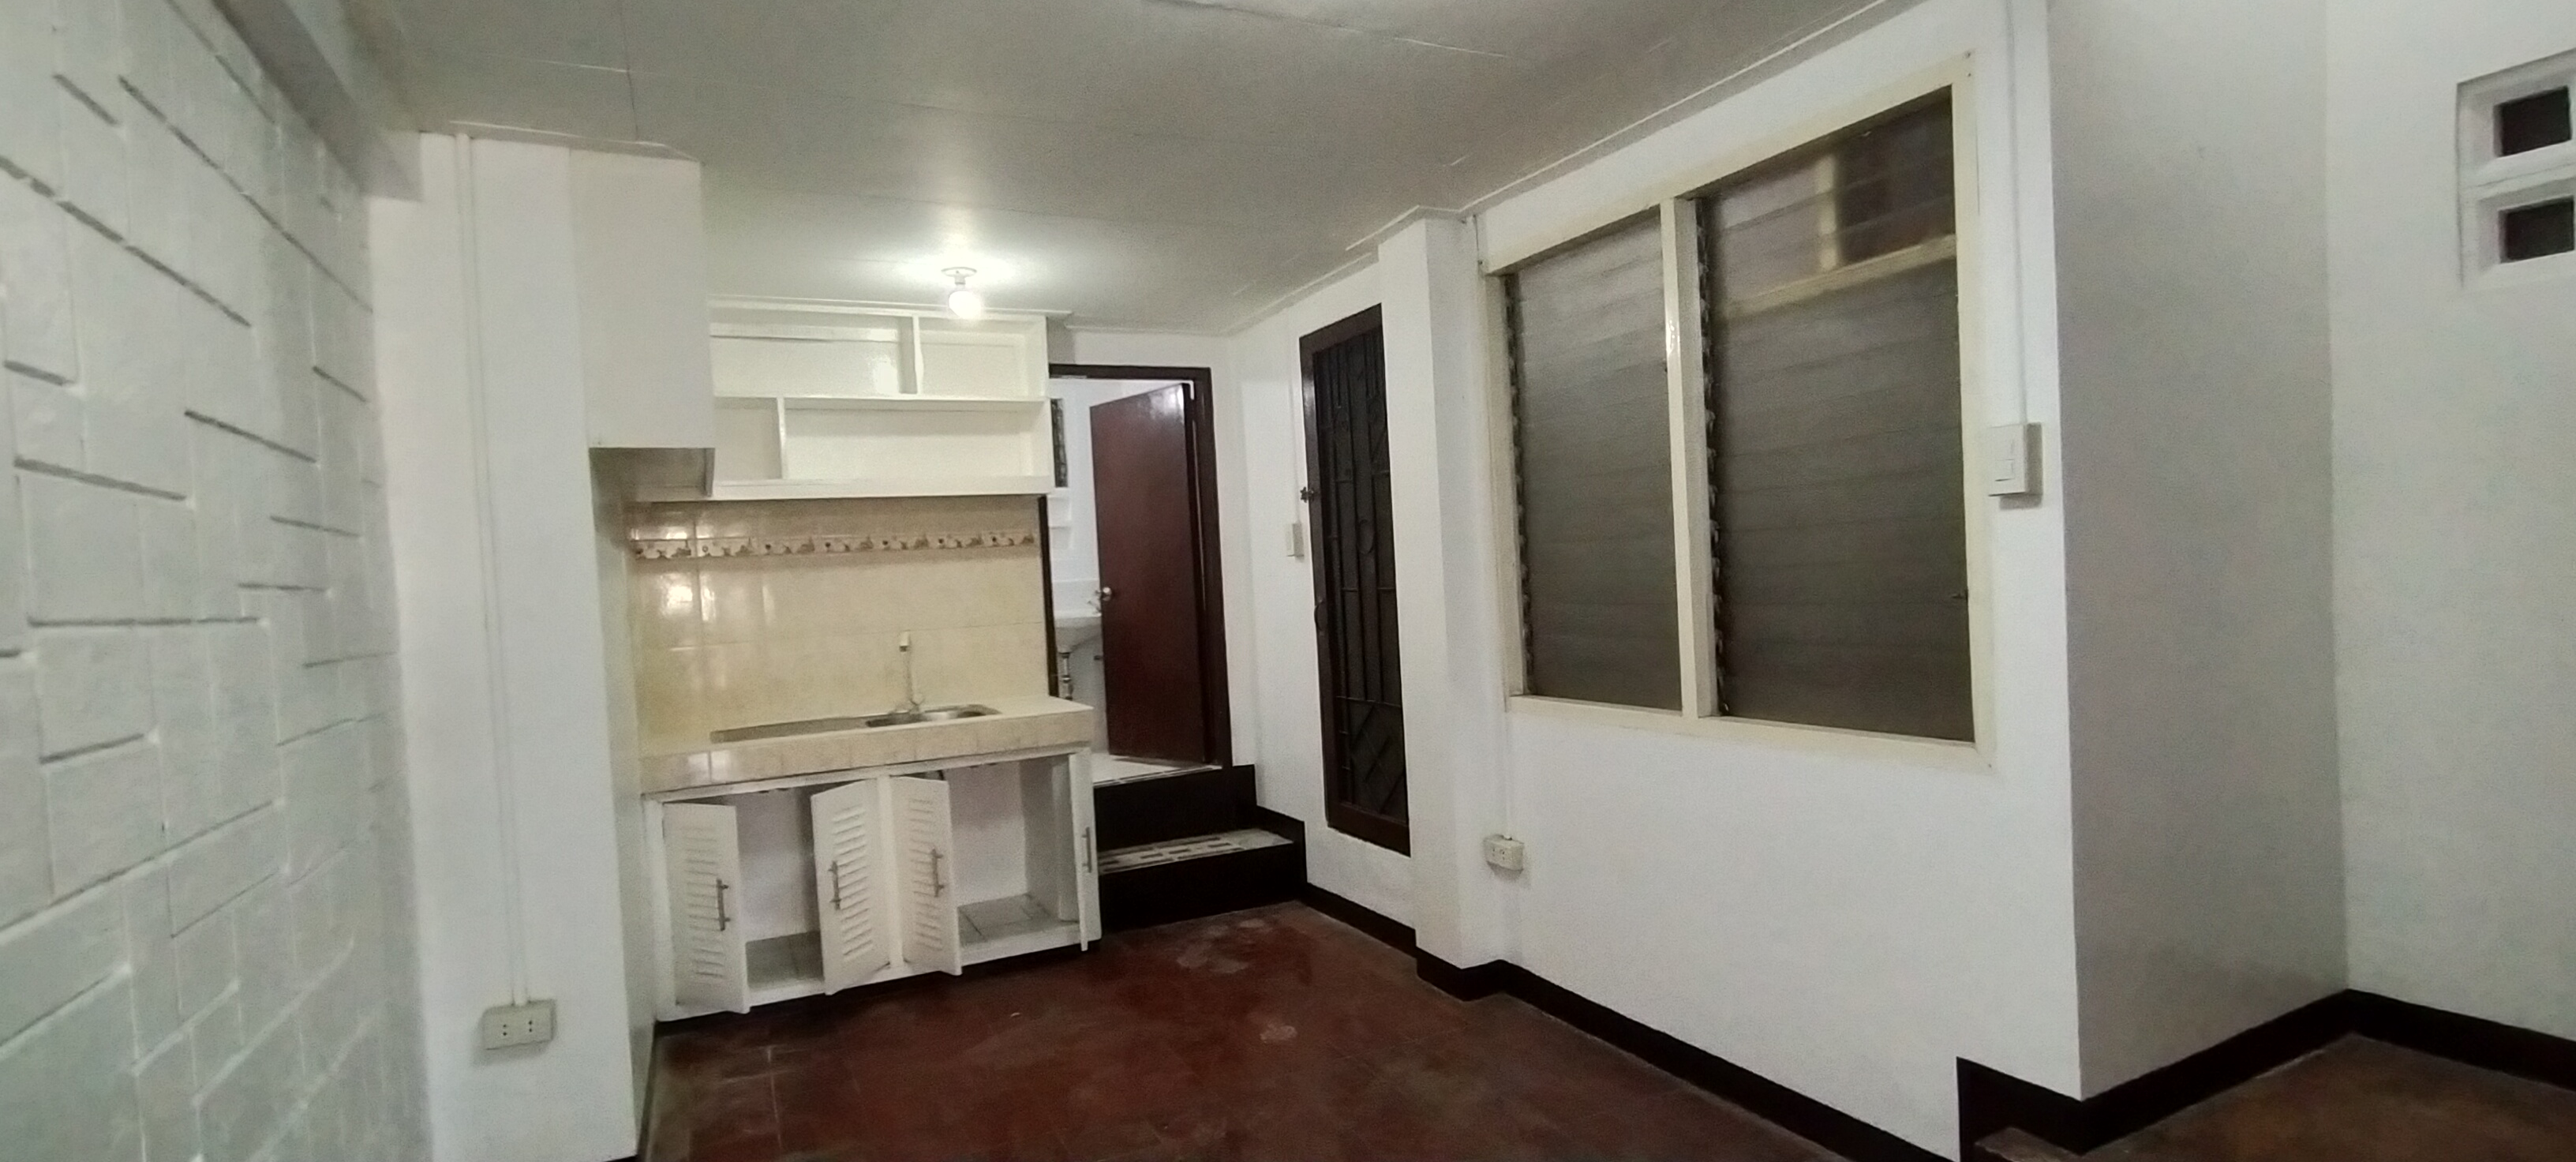 2-bedroom-apartment-located-in-sepulveda-cebu-city